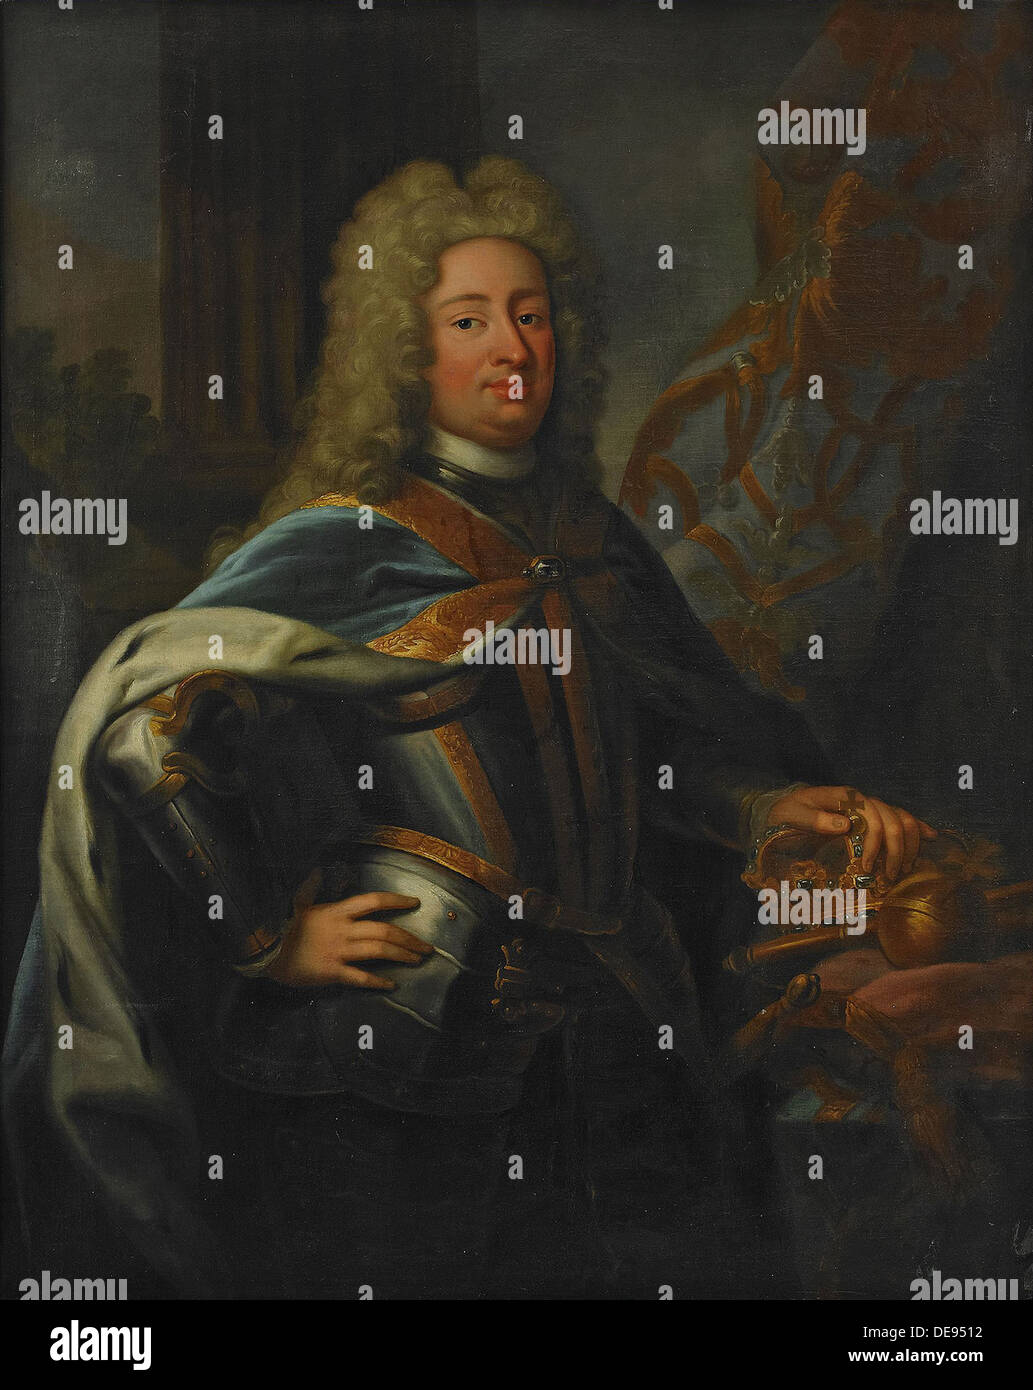 Ritratto di Re Federico I di Svezia (1676-1751). Artista: Schroeder, Georg Engelhard (1684-1750) Foto Stock